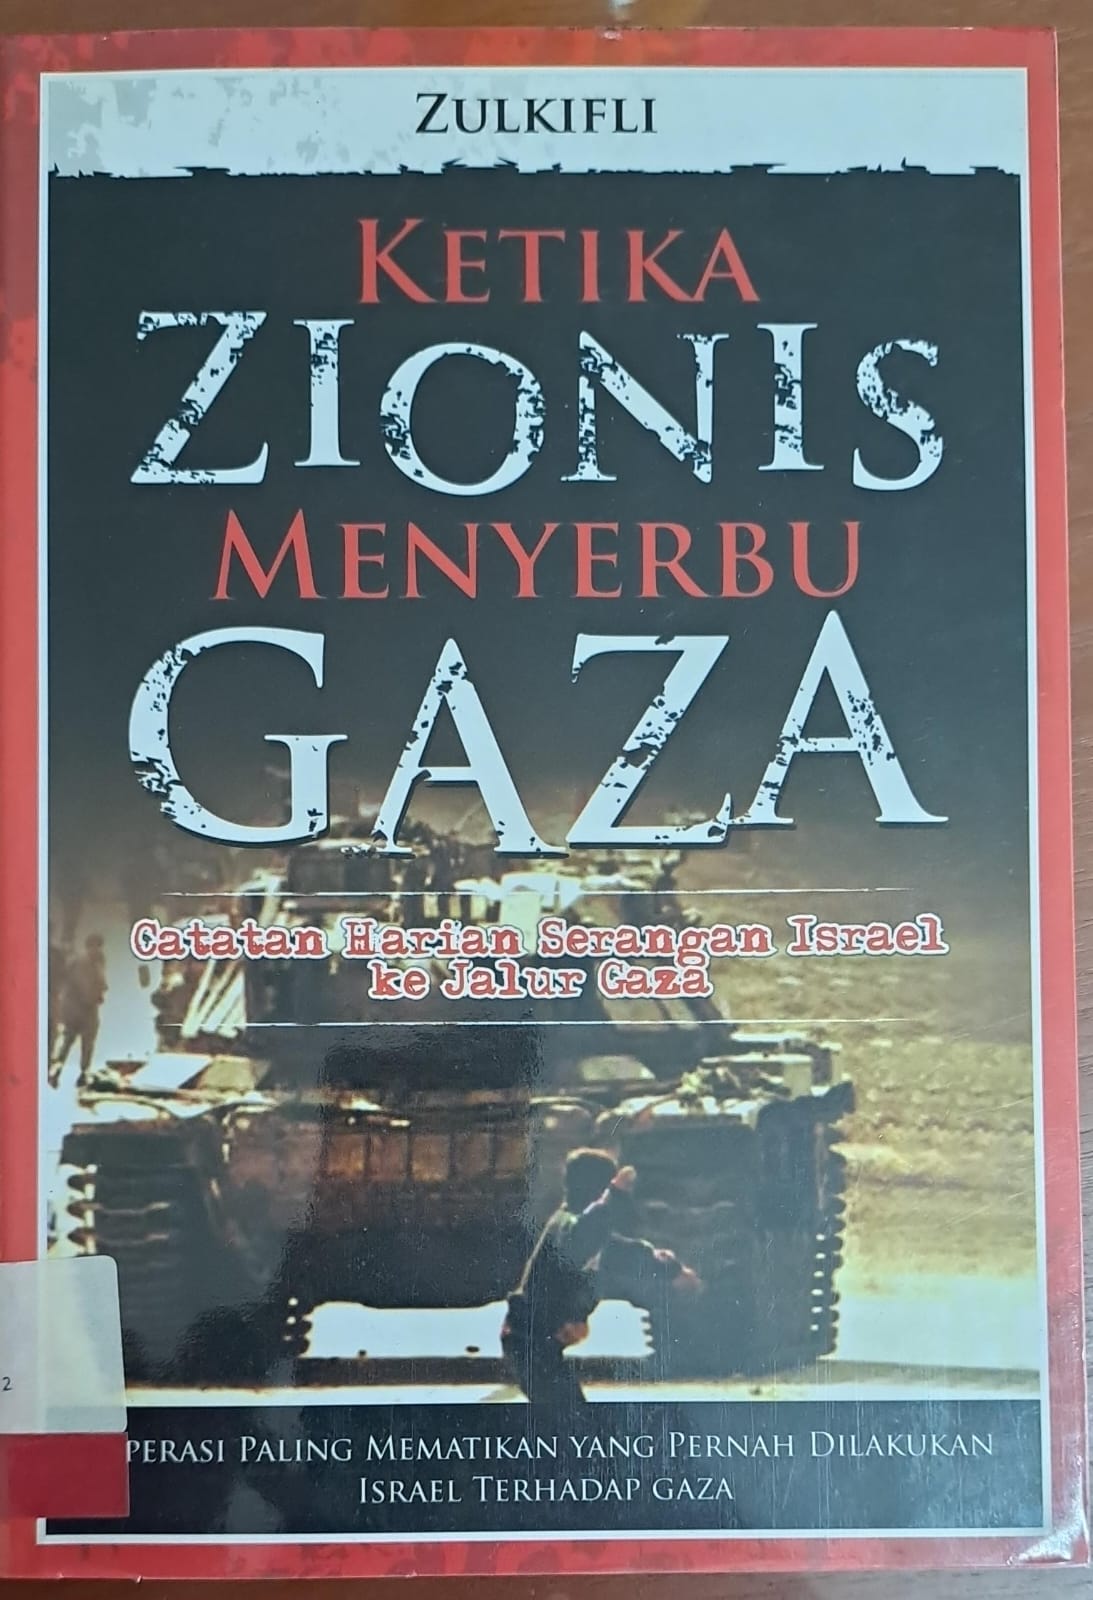 Ketika zionis menyerbu Gaza :  Catatan harian serangaan Israel ke jalur Gaza